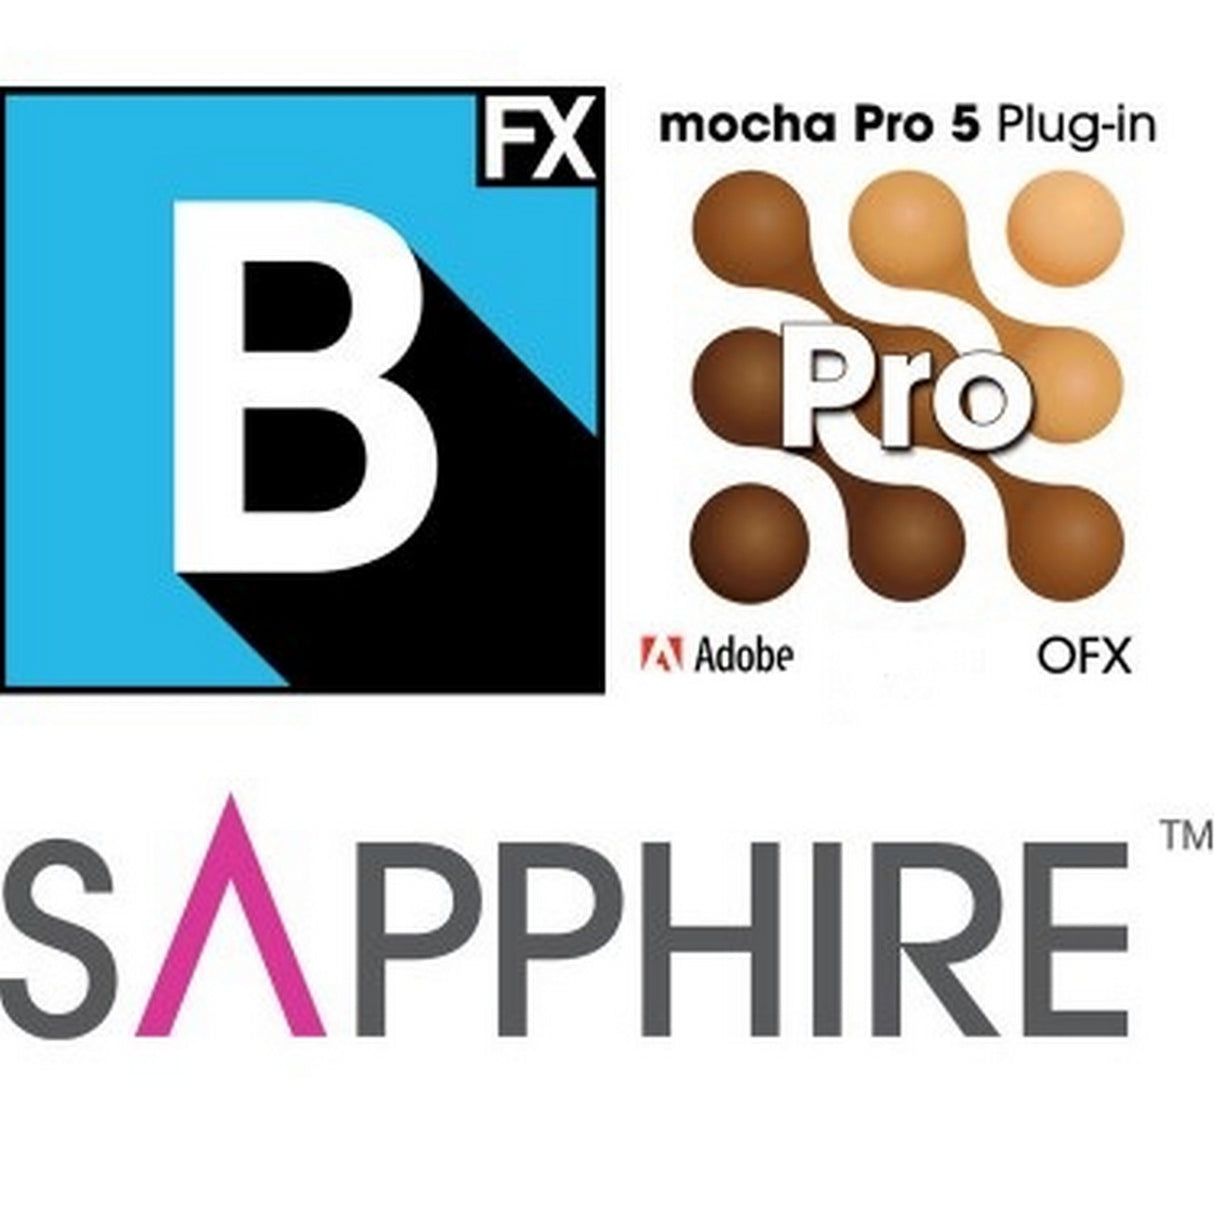 GenArts Sapphire 10 Boris FX Continuum Complete 10 mocha Pro 5 Bundle | Video Software Adobe and OFX